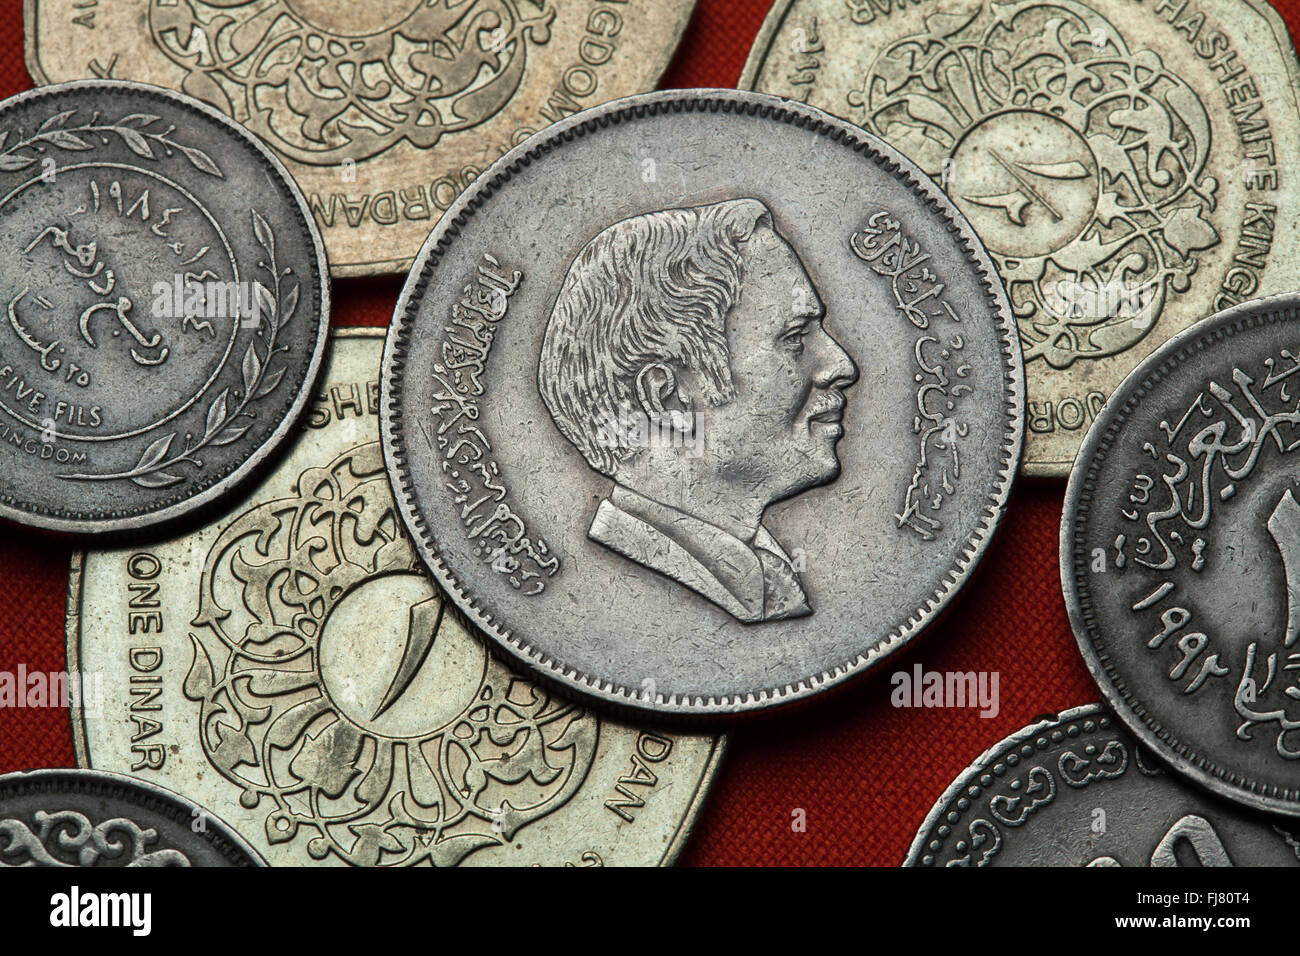 Coins of Jordan. King Hussein bin Talal of Jordan depicted in the Jordanian 100 fils coin. Stock Photo